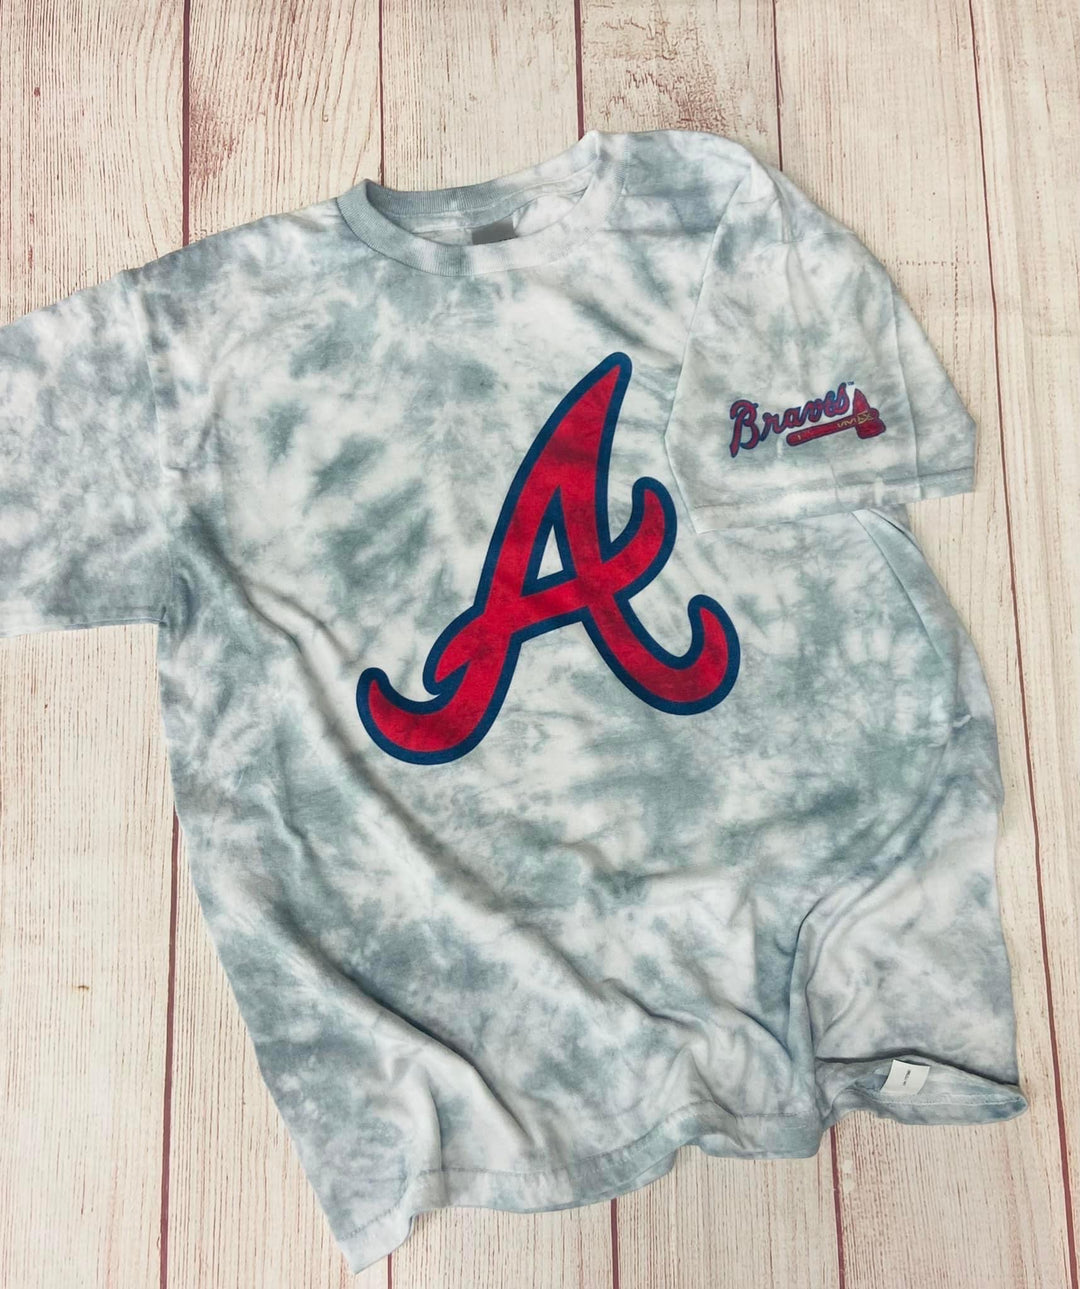 Braves "A" Shirt